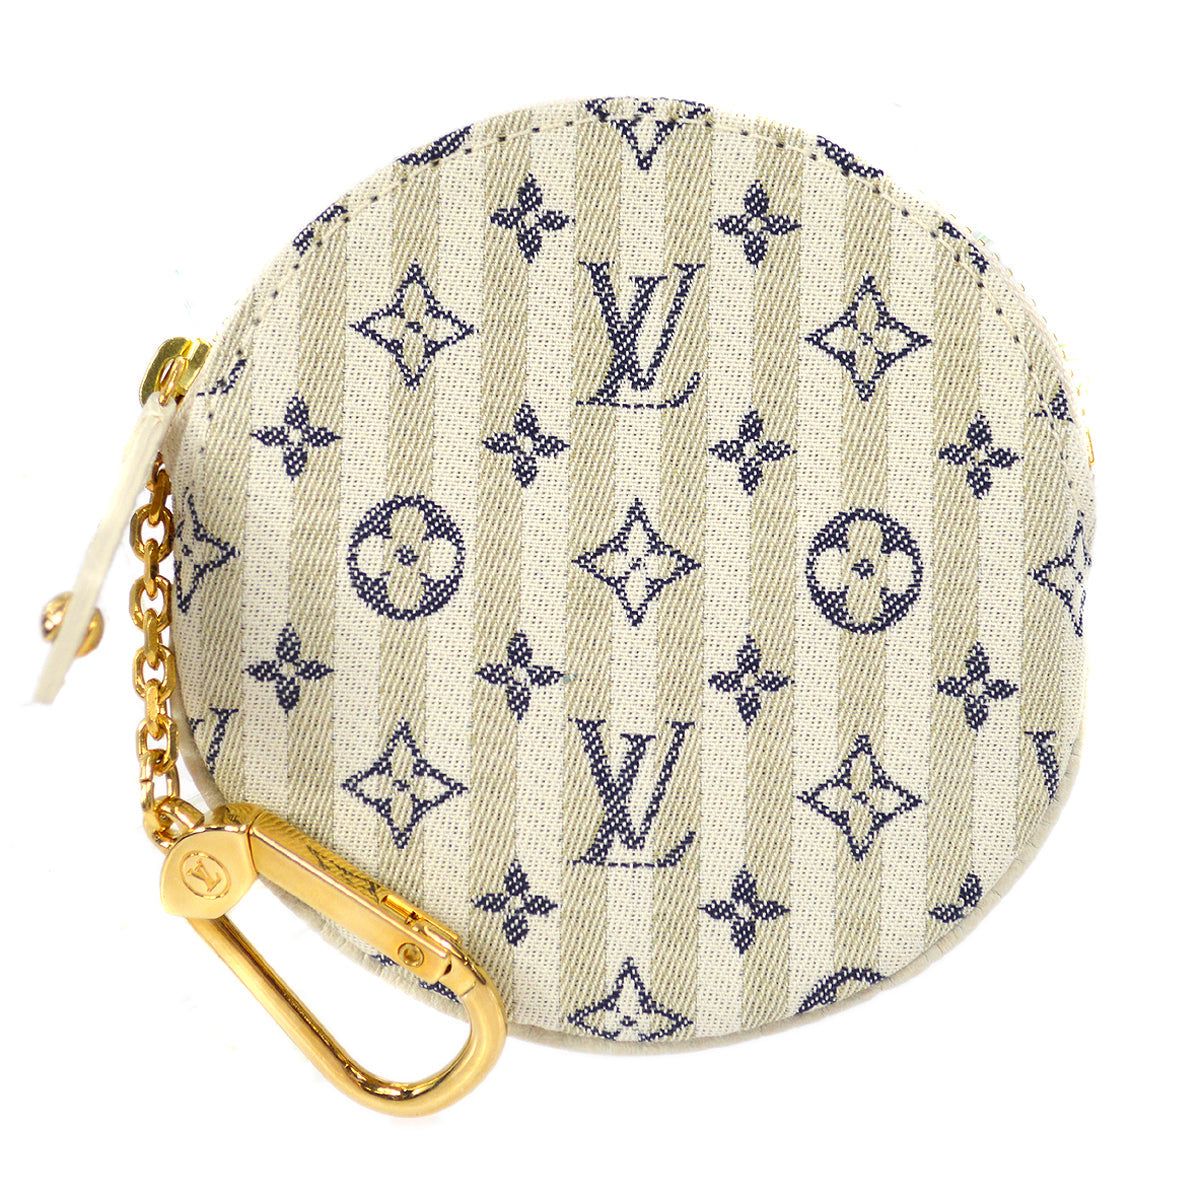 _) Louis Vuitton Monogram Porte Monnaie Rond Coin Case Purse